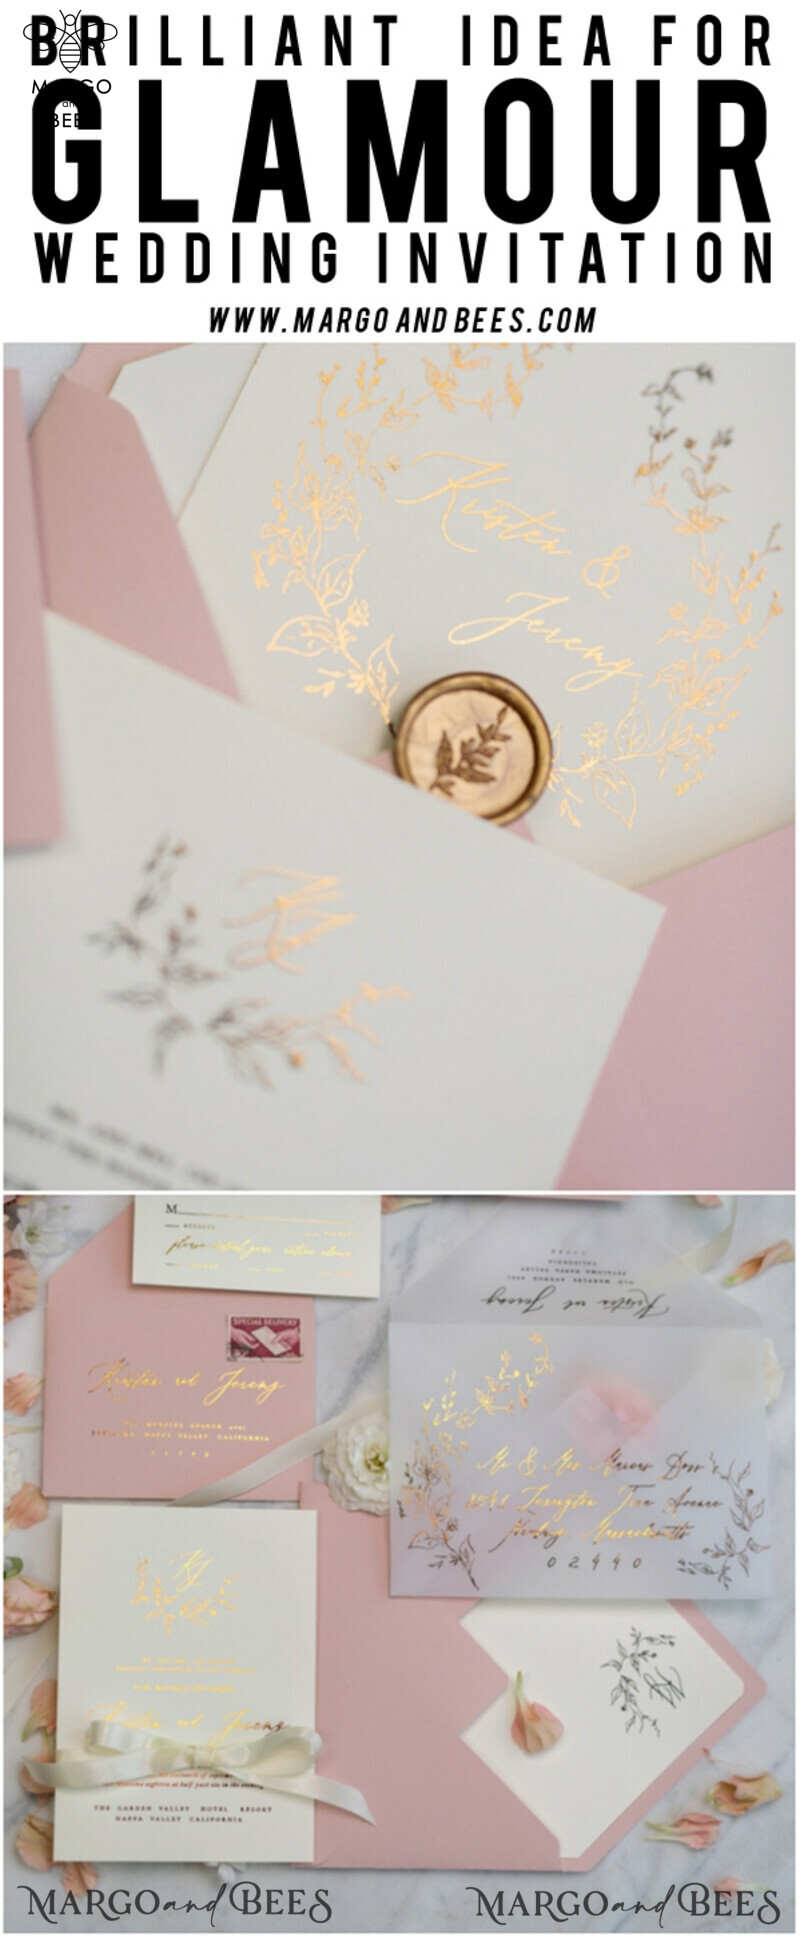 Bespoke Vellum Wedding Invitation Suite: Romantic Blush Pink and Glamour Gold Foil for an Elegant Golden Affair-36